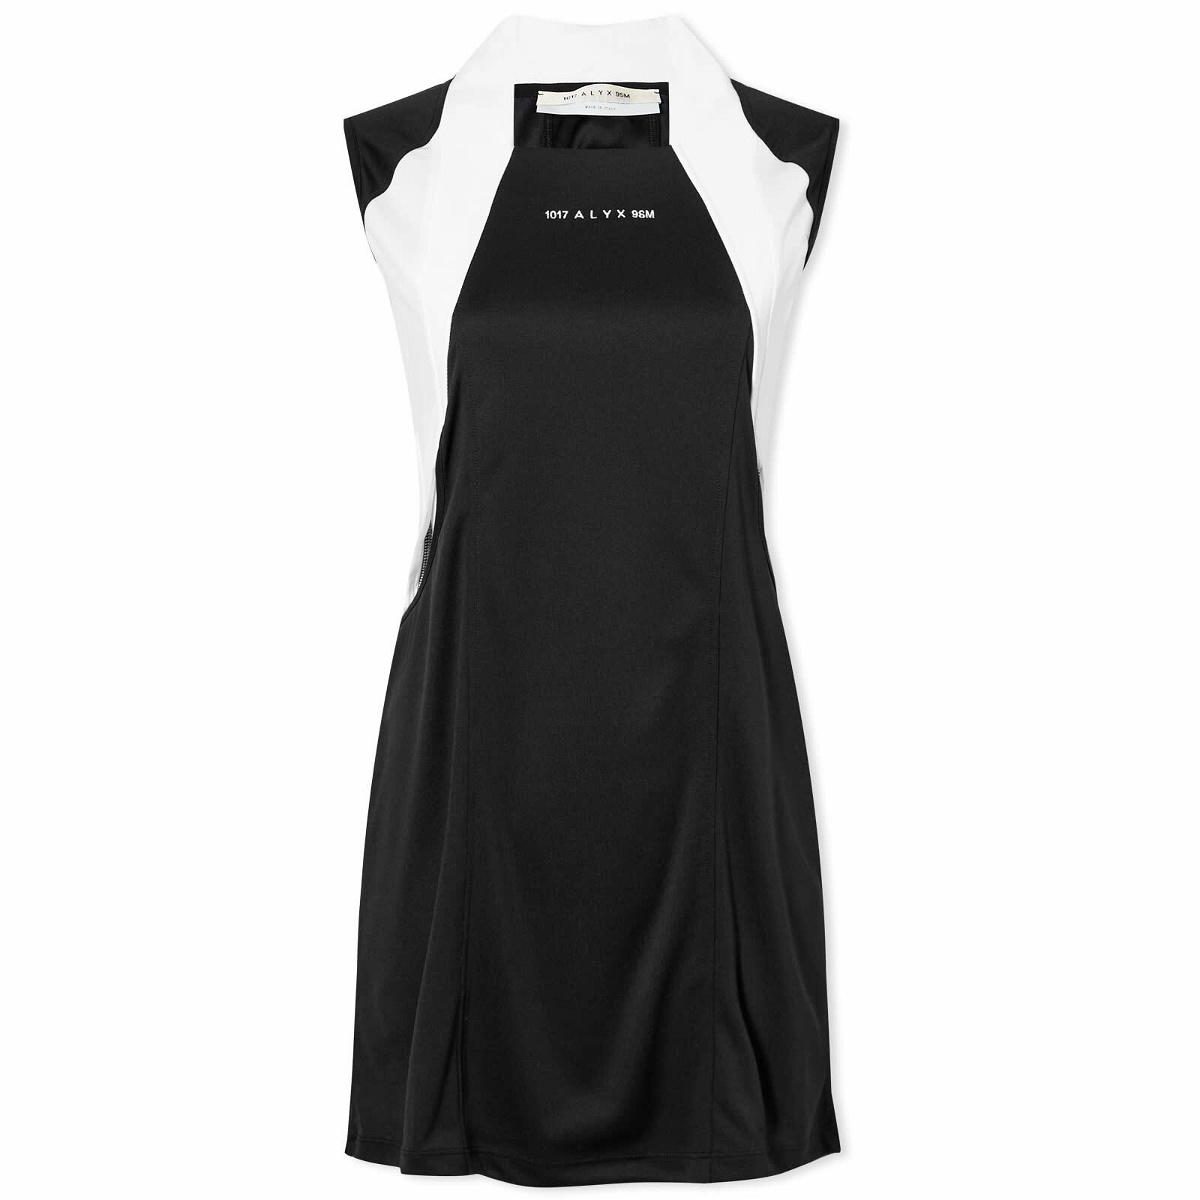 Photo: 1017 ALYX 9SM Women's Football Short Dress in Black/White